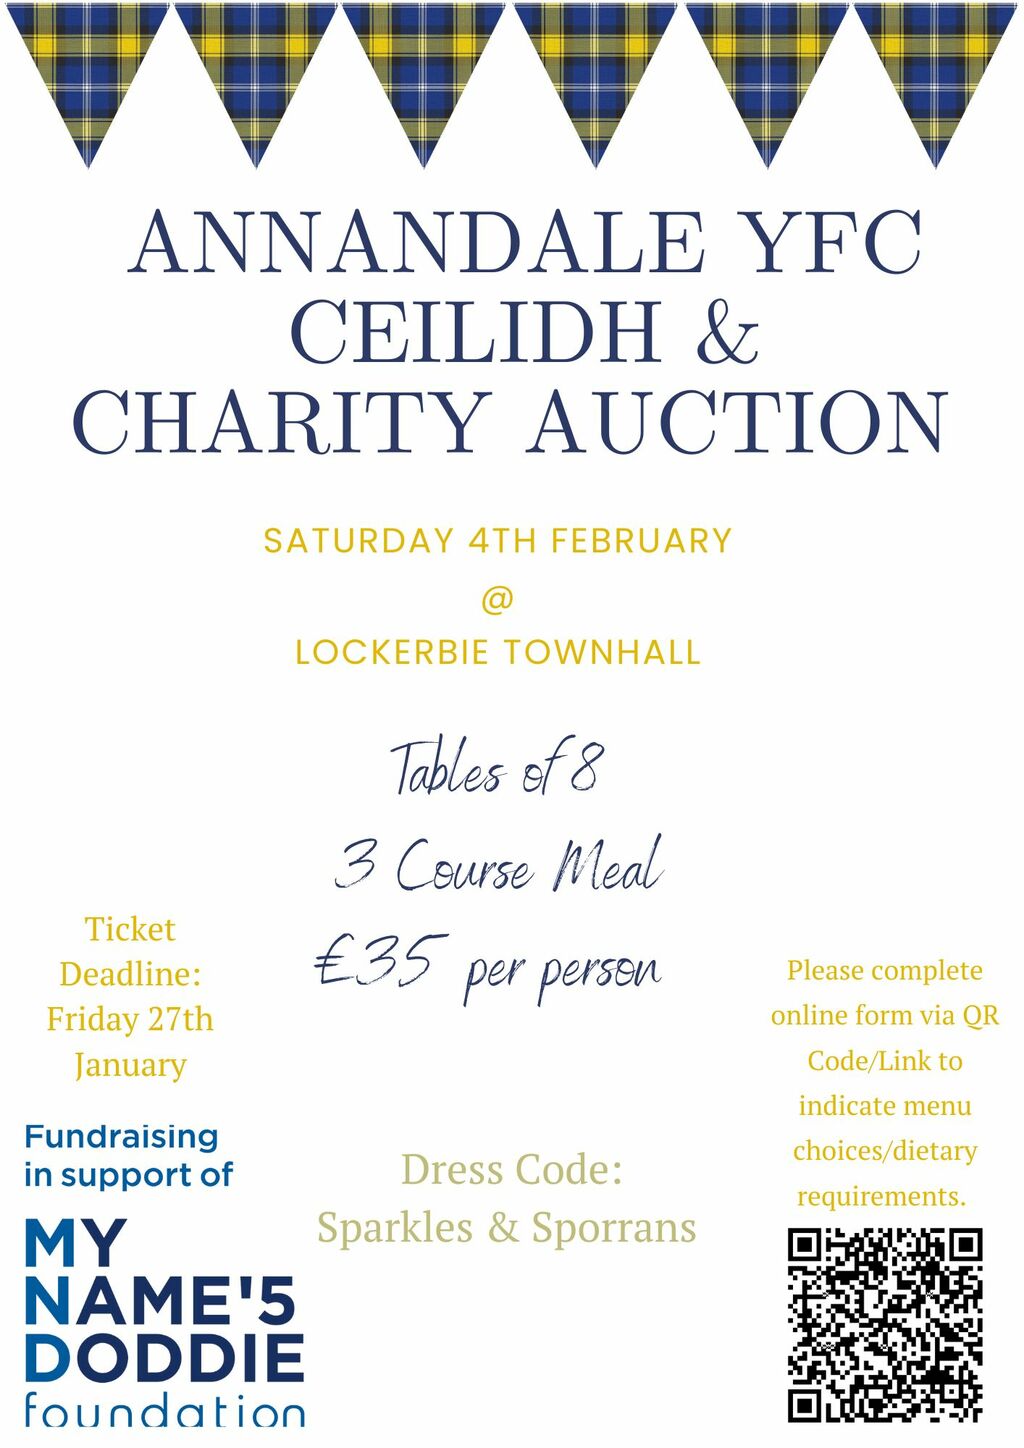 Annandale YFC Ceilidh & Charity Auction